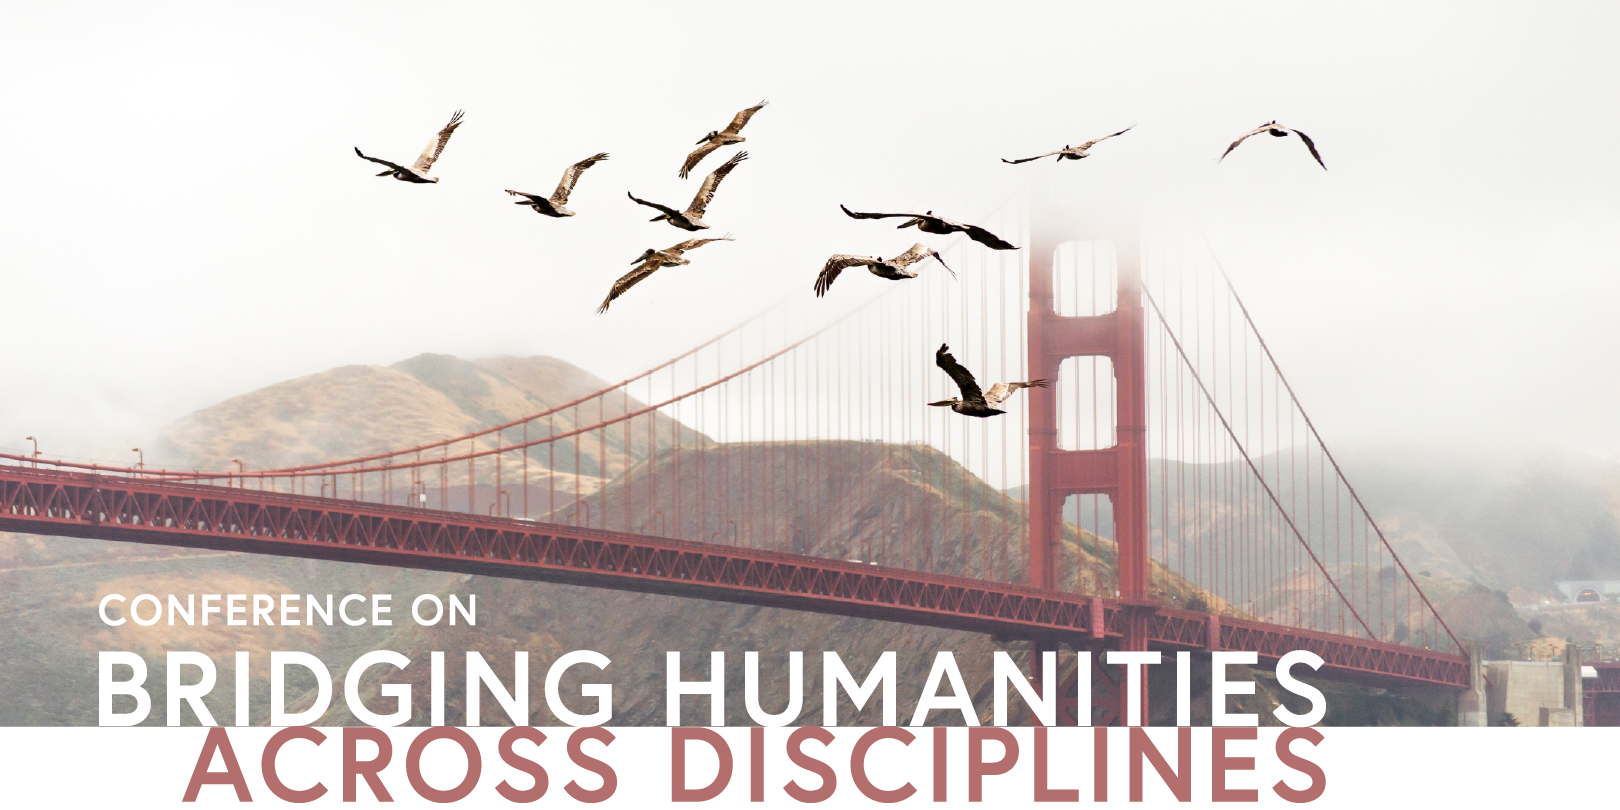 Conference on Bridging Humanities Across Disciplines